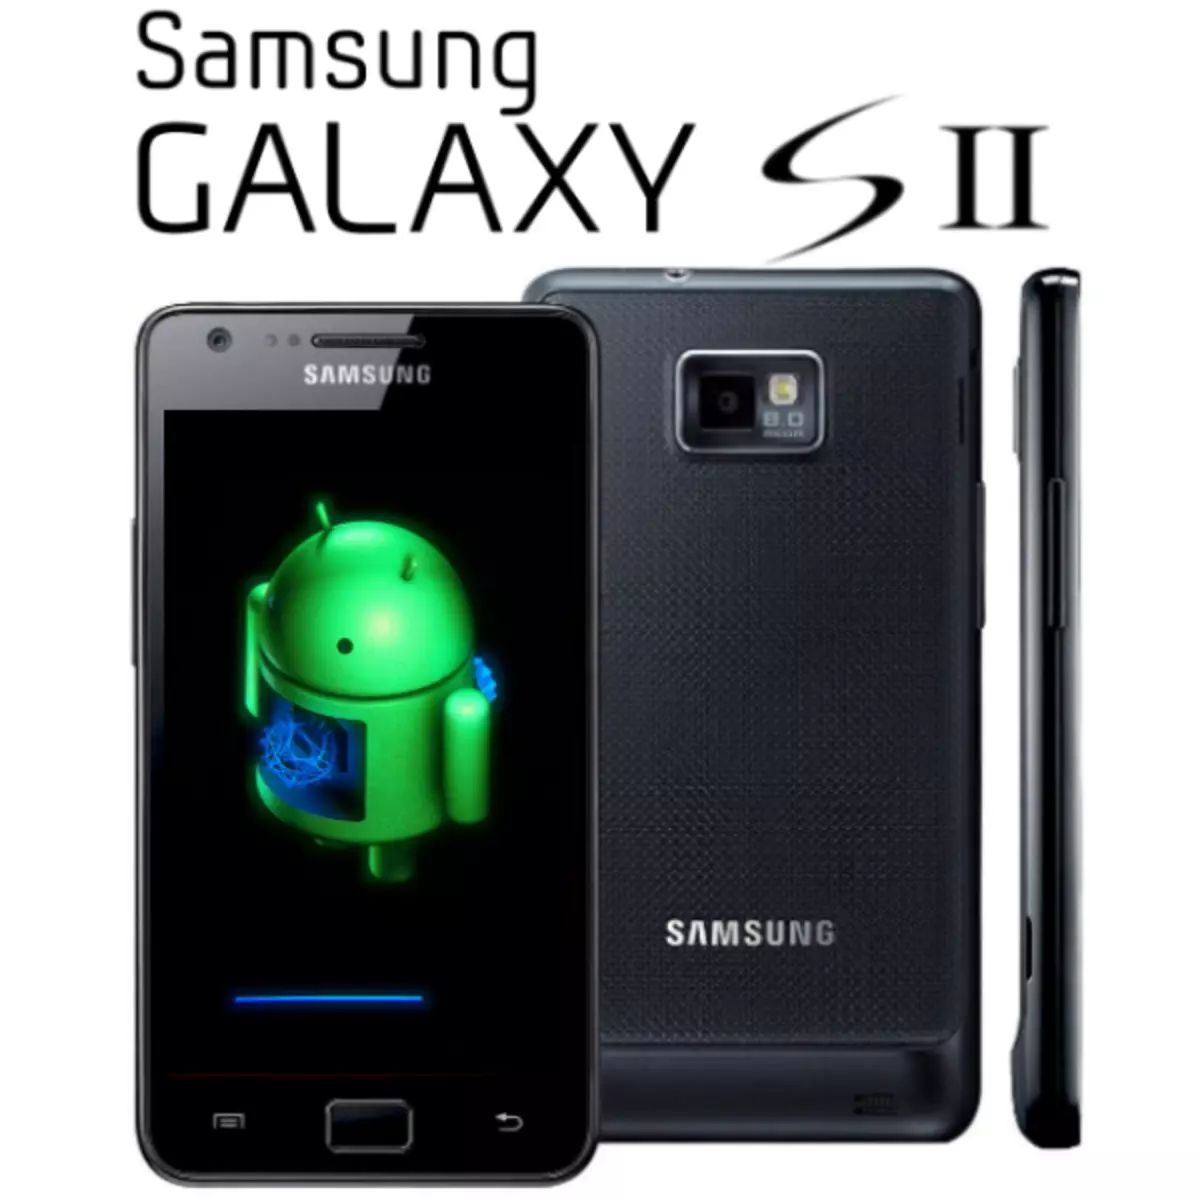 Samsung Galaxy S2 GT-I9100 Firmware